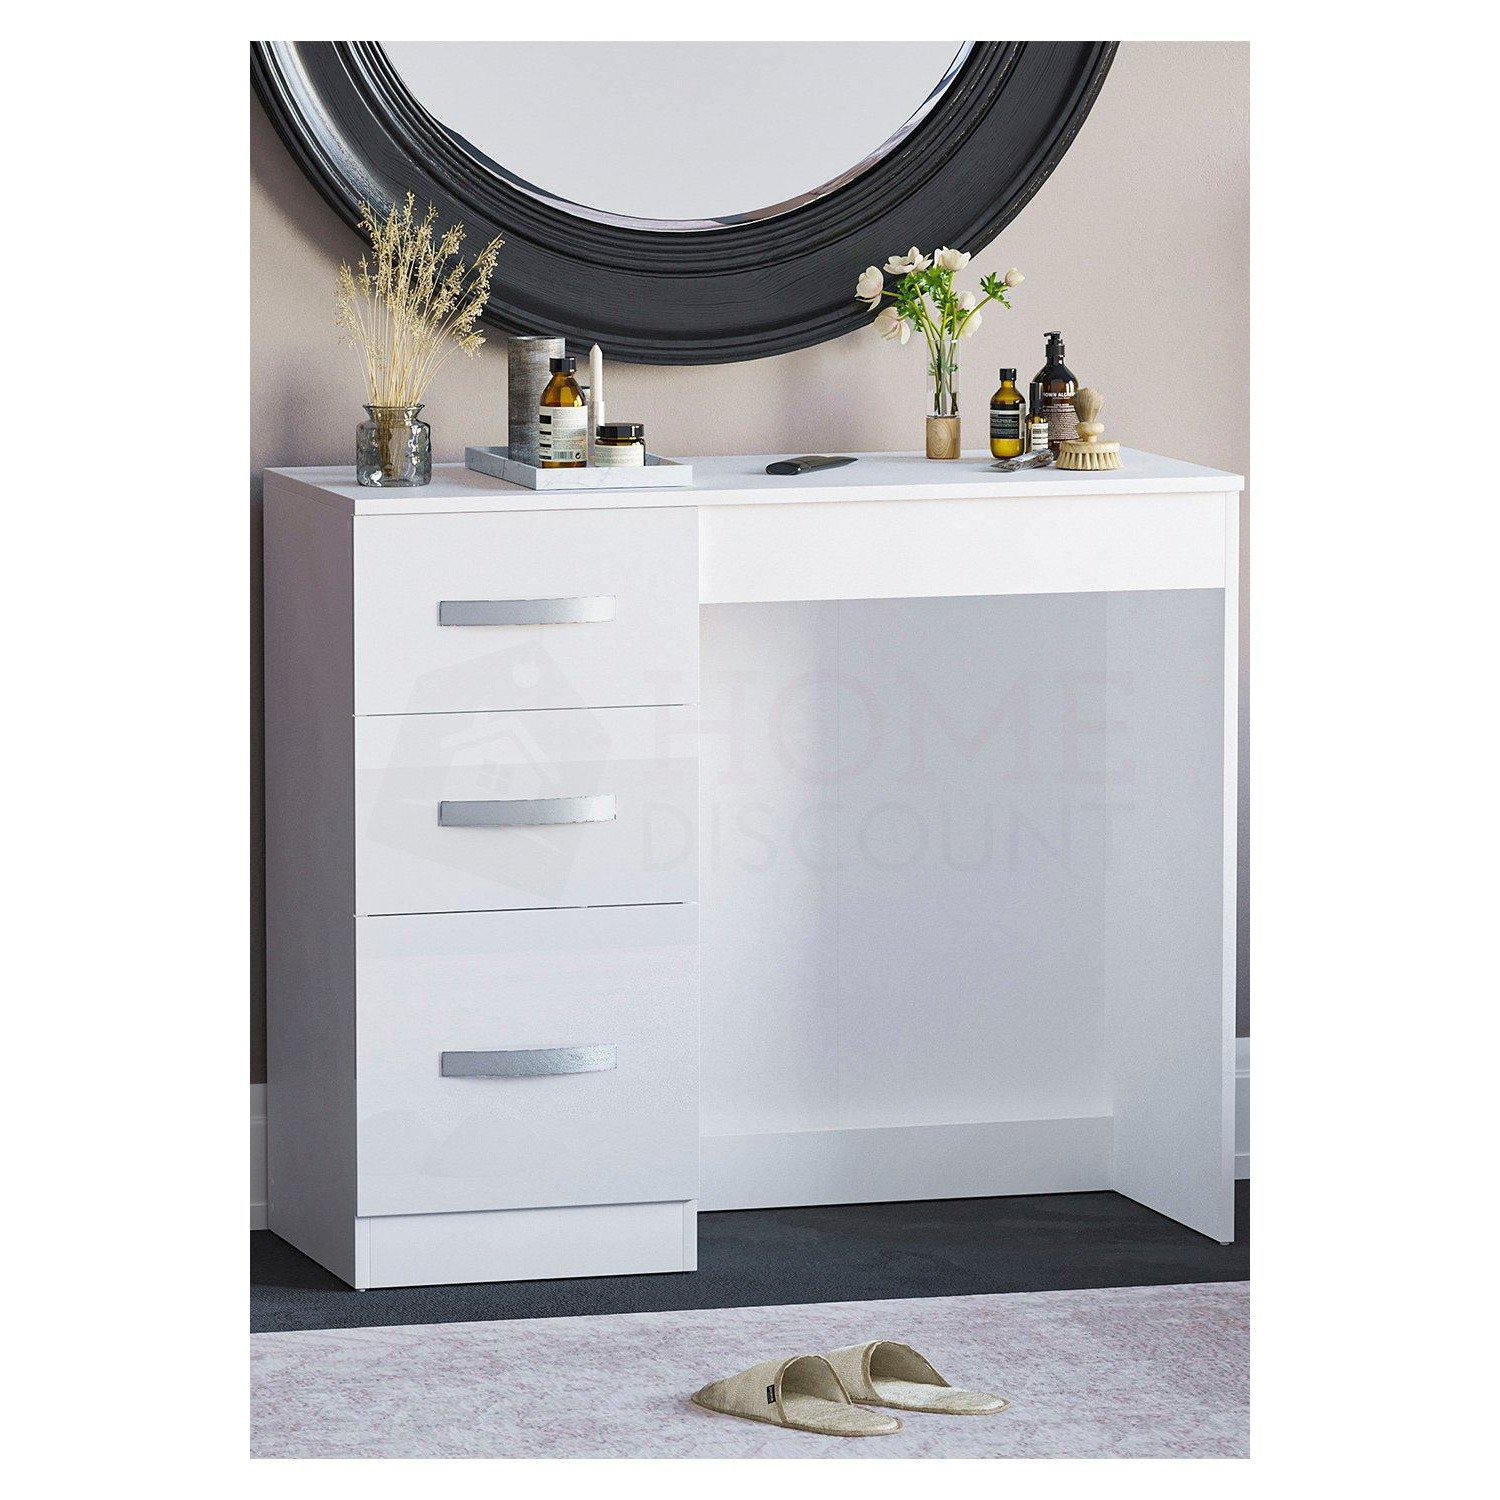 Vida Designs Hulio Dressing Table Storage Furniture MDF 790 x 930 x 380 mm - image 1